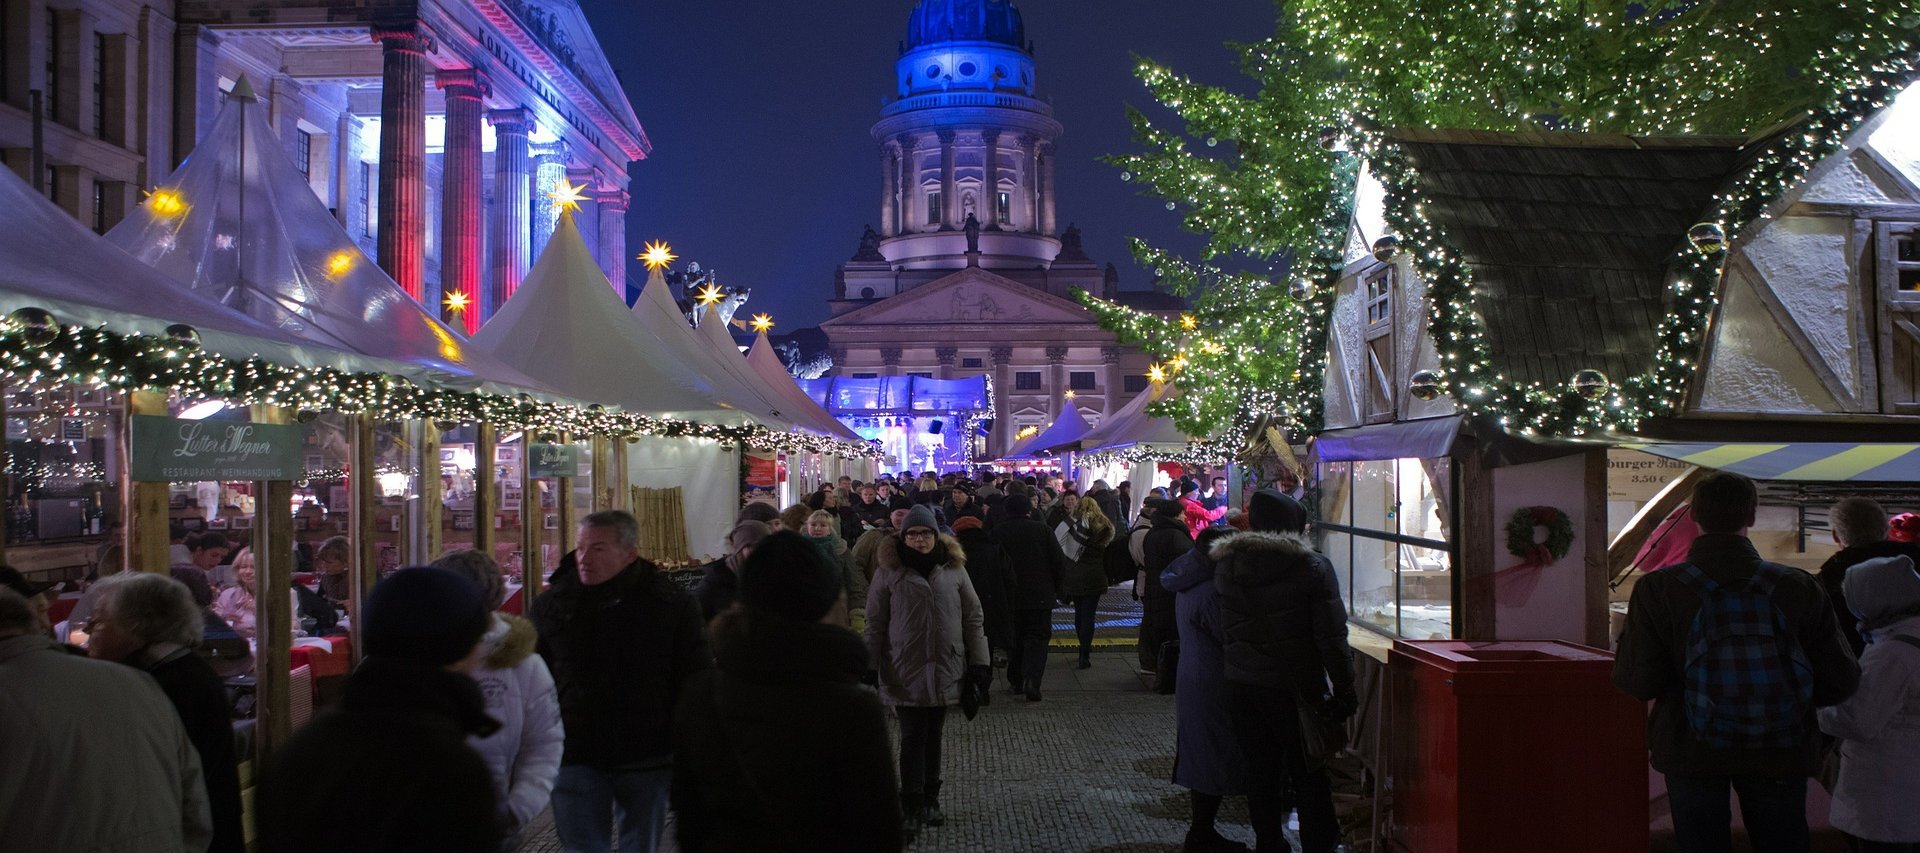 The Best Christmas Markets in Berlin